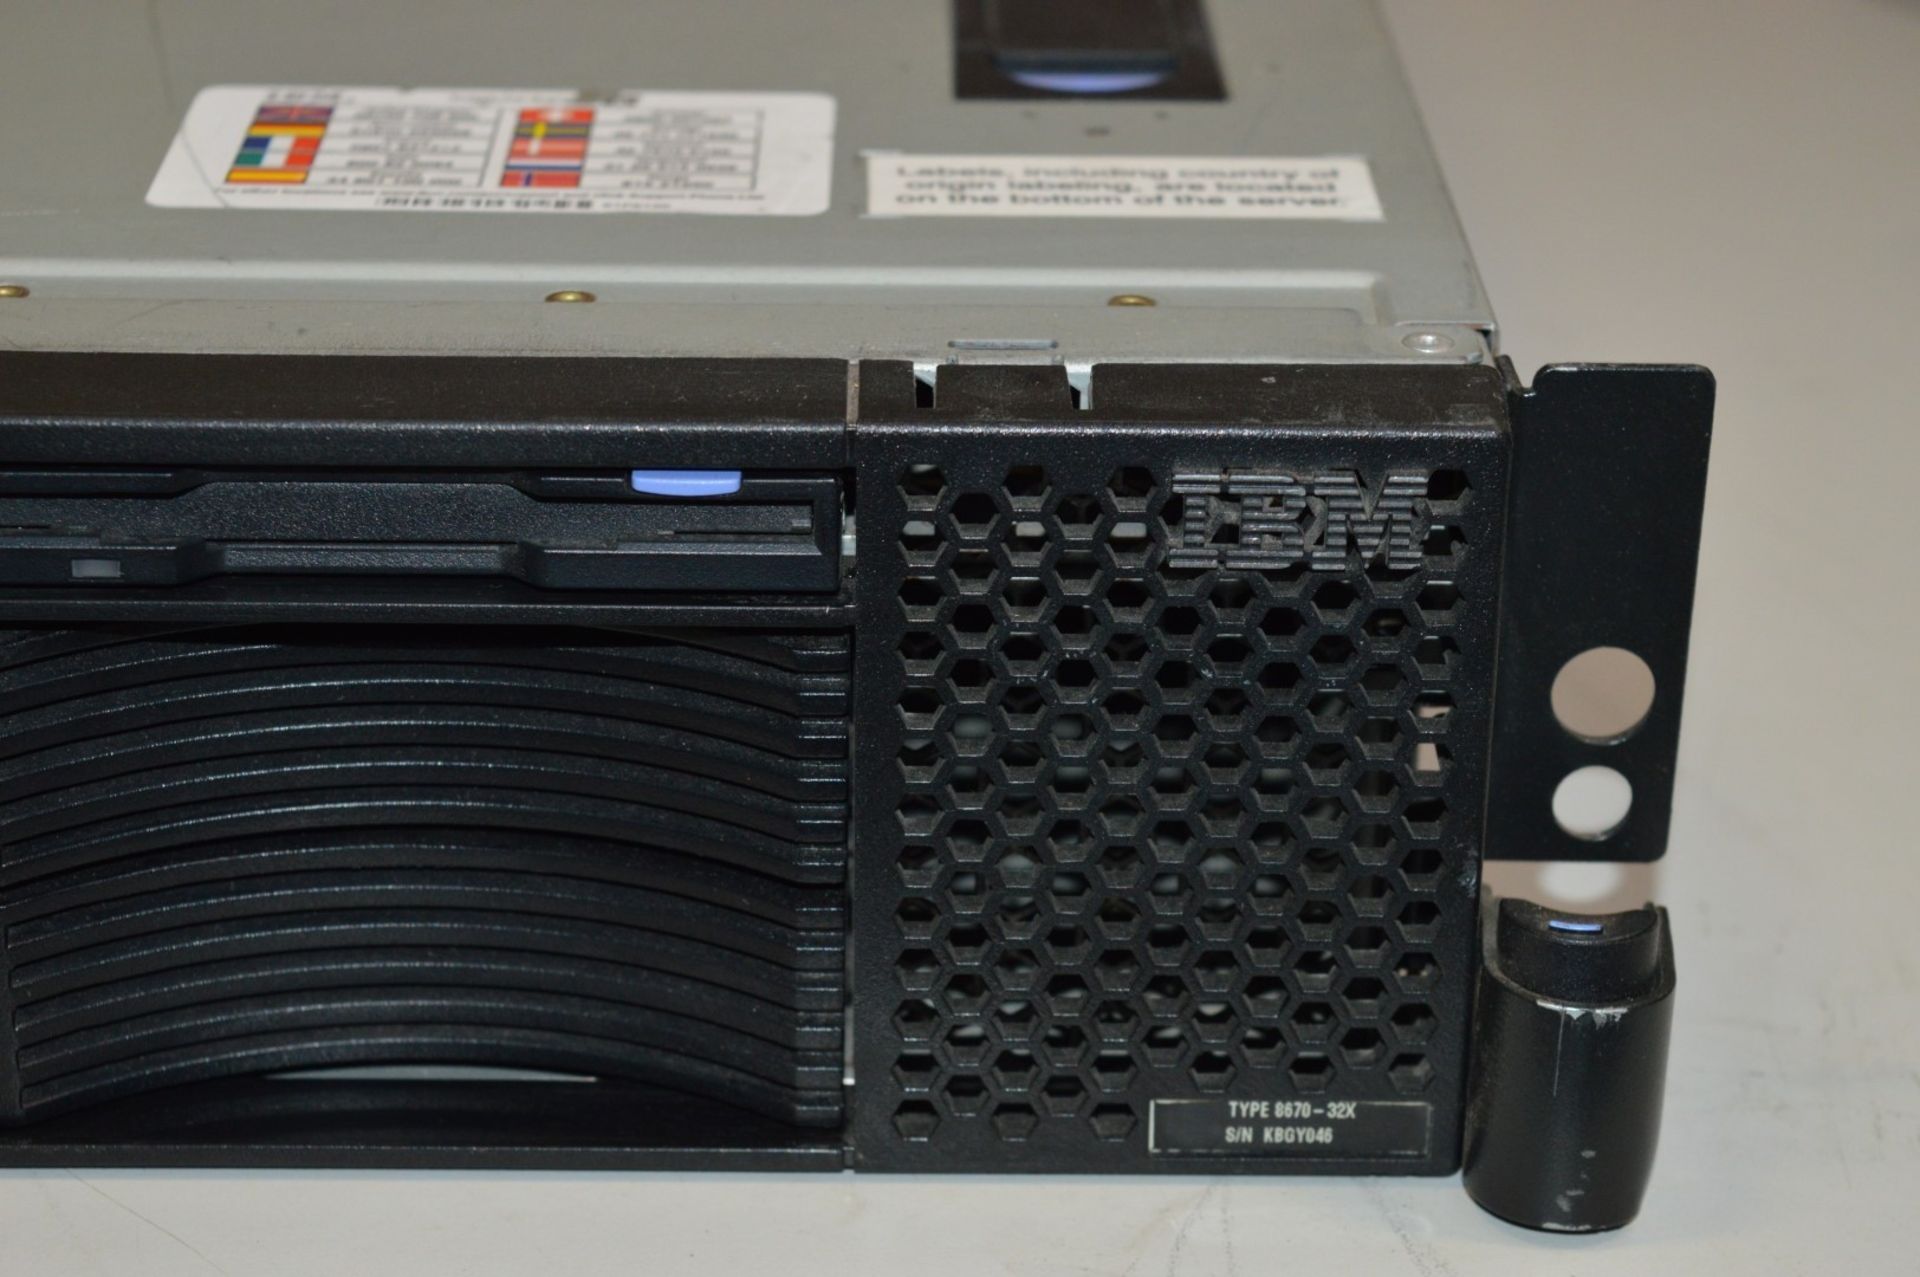 1 x IBM xSeries 345 Server - Includes Dual Xeon Processors, 1gb Ram, Raid Card - Hard Disk Drives - Image 5 of 8